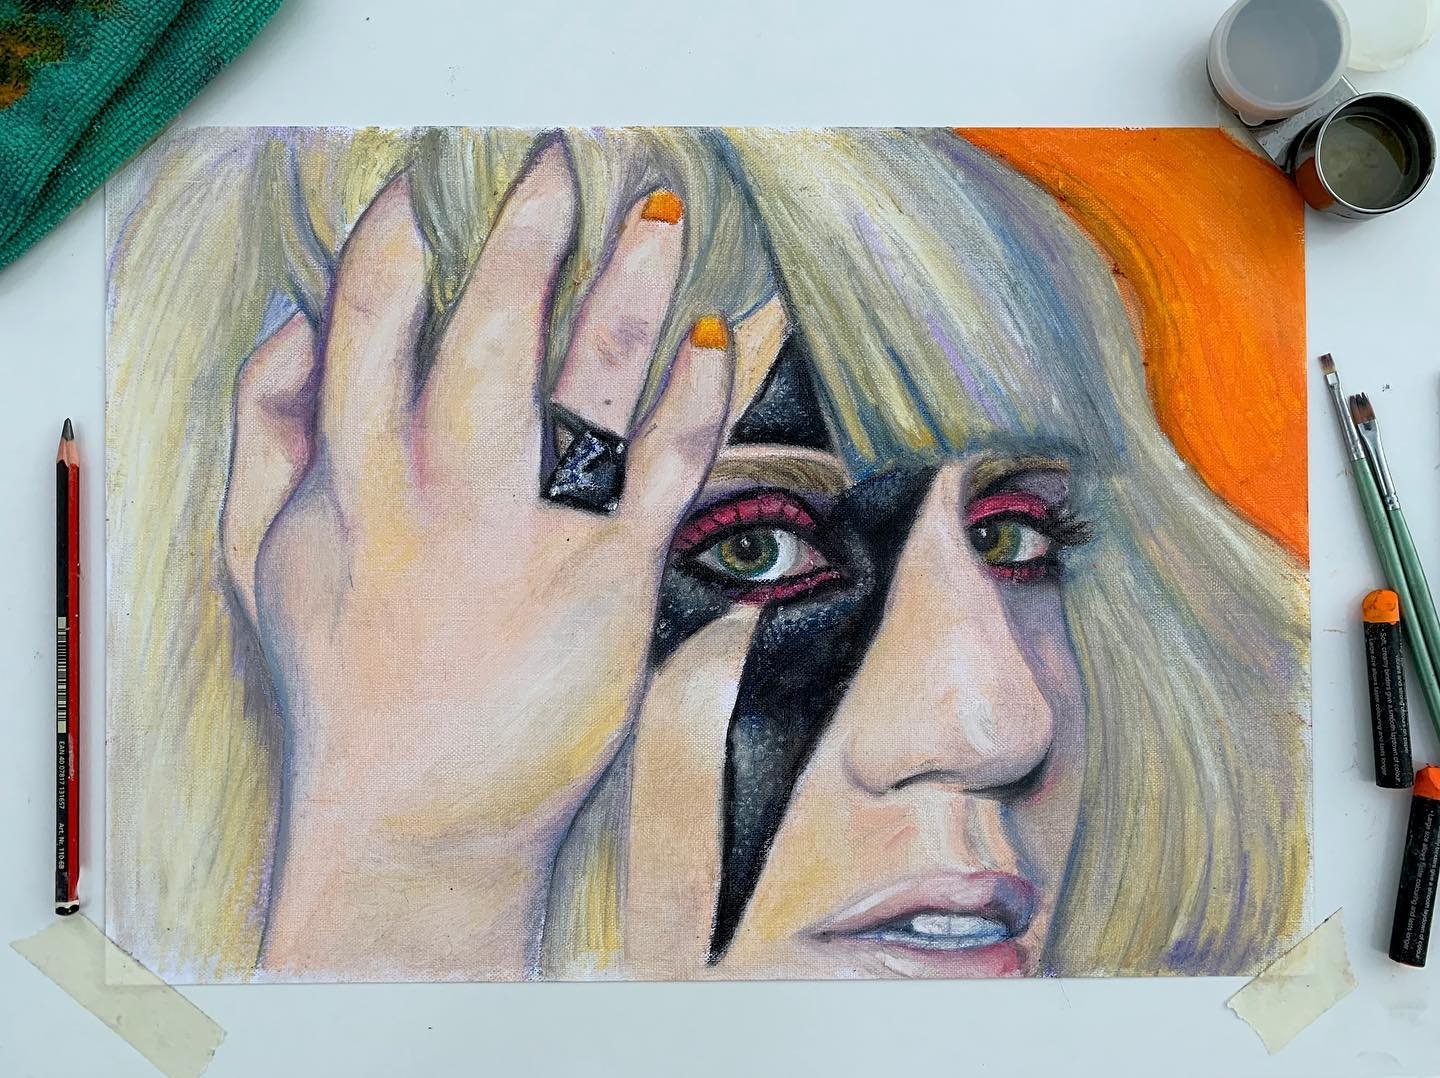 https://images.squarespace-cdn.com/content/v1/639d9c8ce938b323b822c66b/1671793535321-JLA76TS9Q37E5UMIACG6/Lady+Gaga+Oil+pastel+painting.jpg